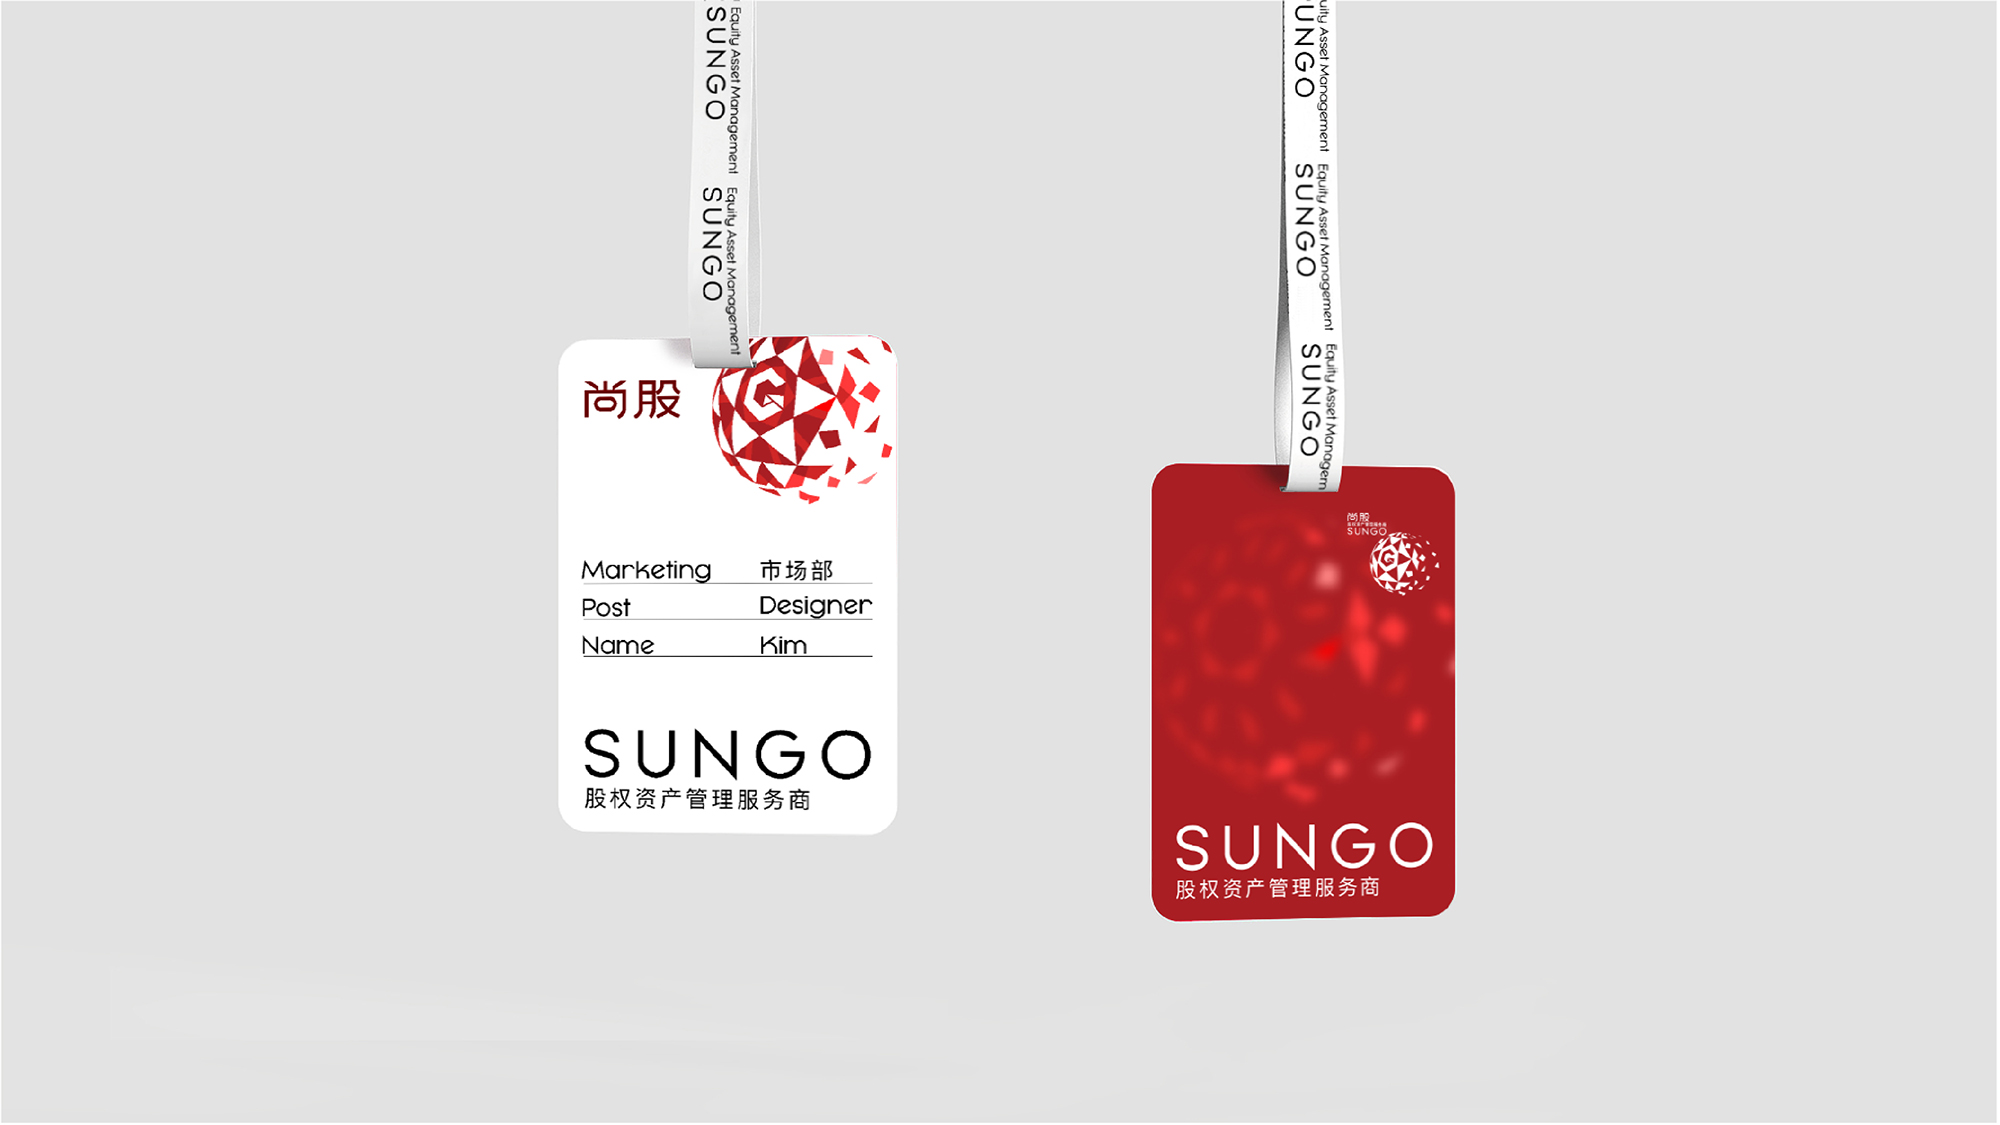 SUNGO-尚股Brand-Design-19.jpg